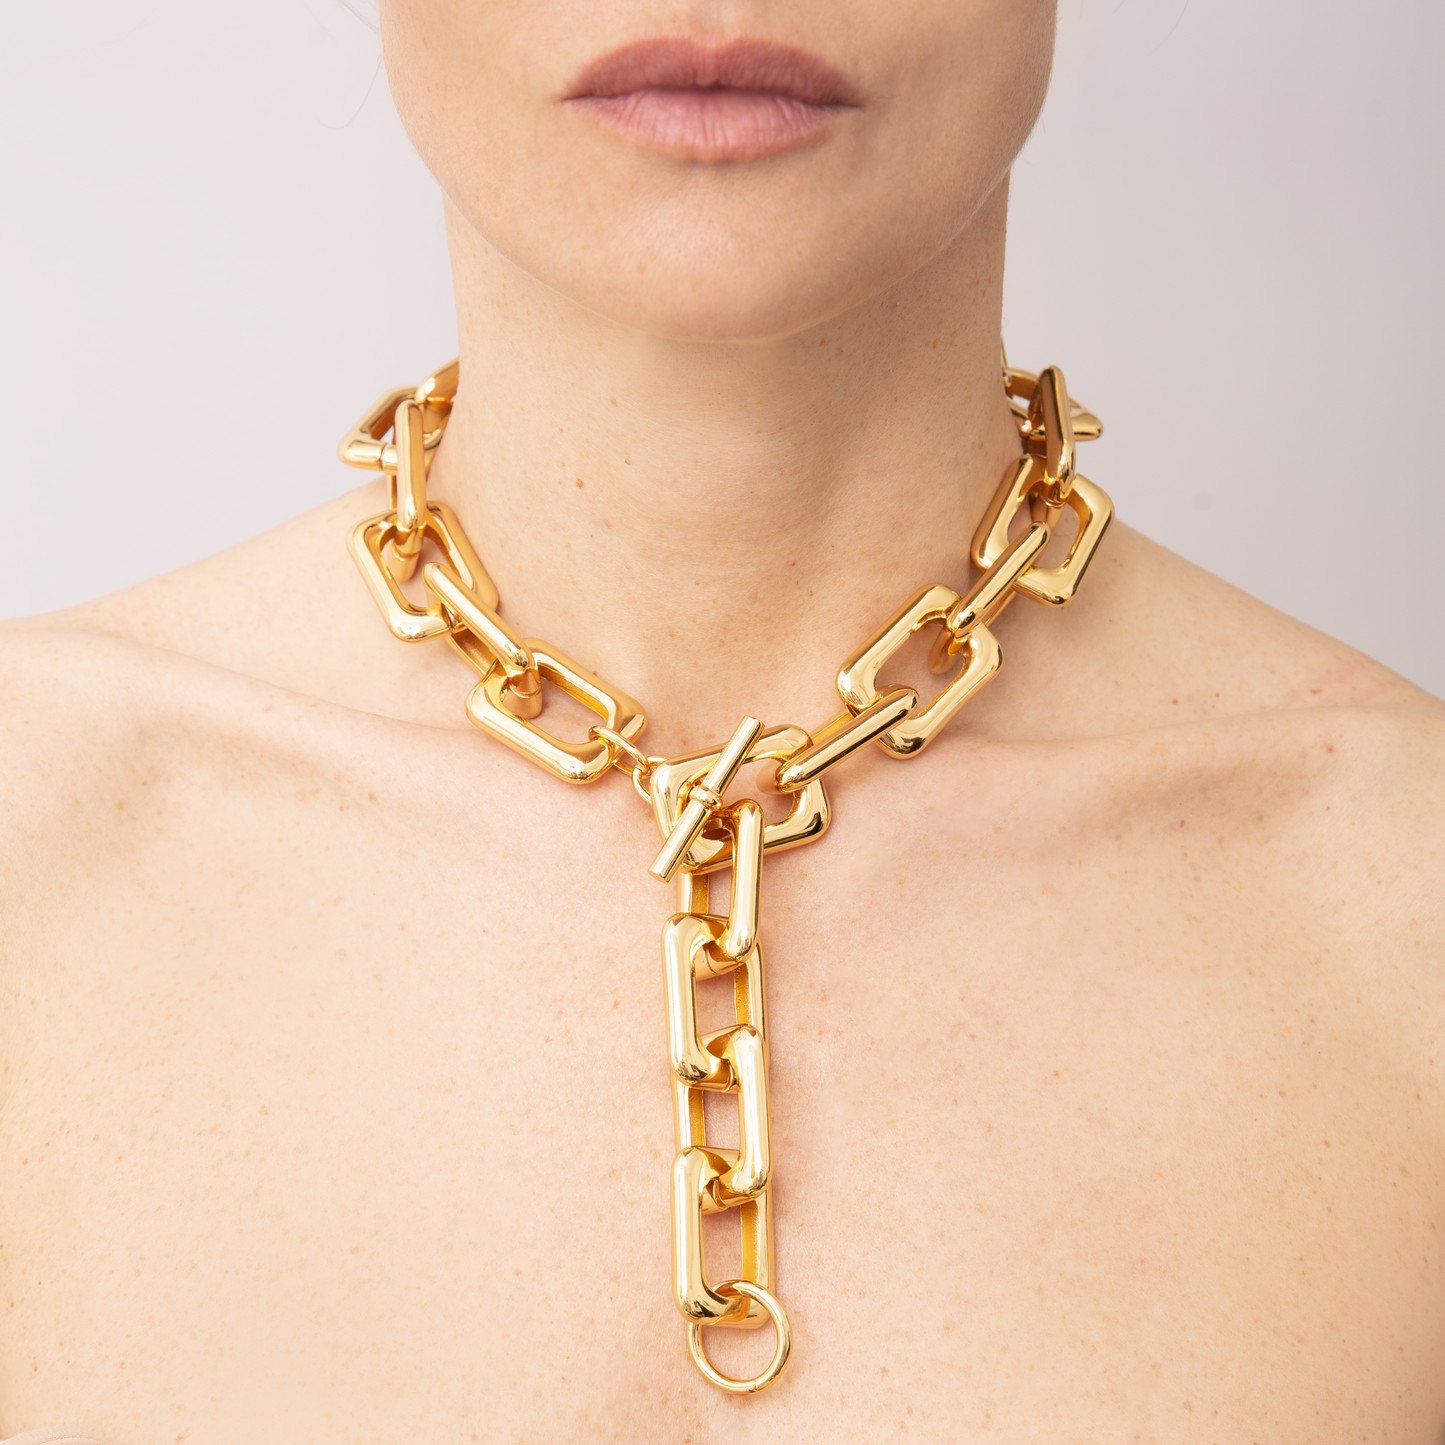 Naomi necklace